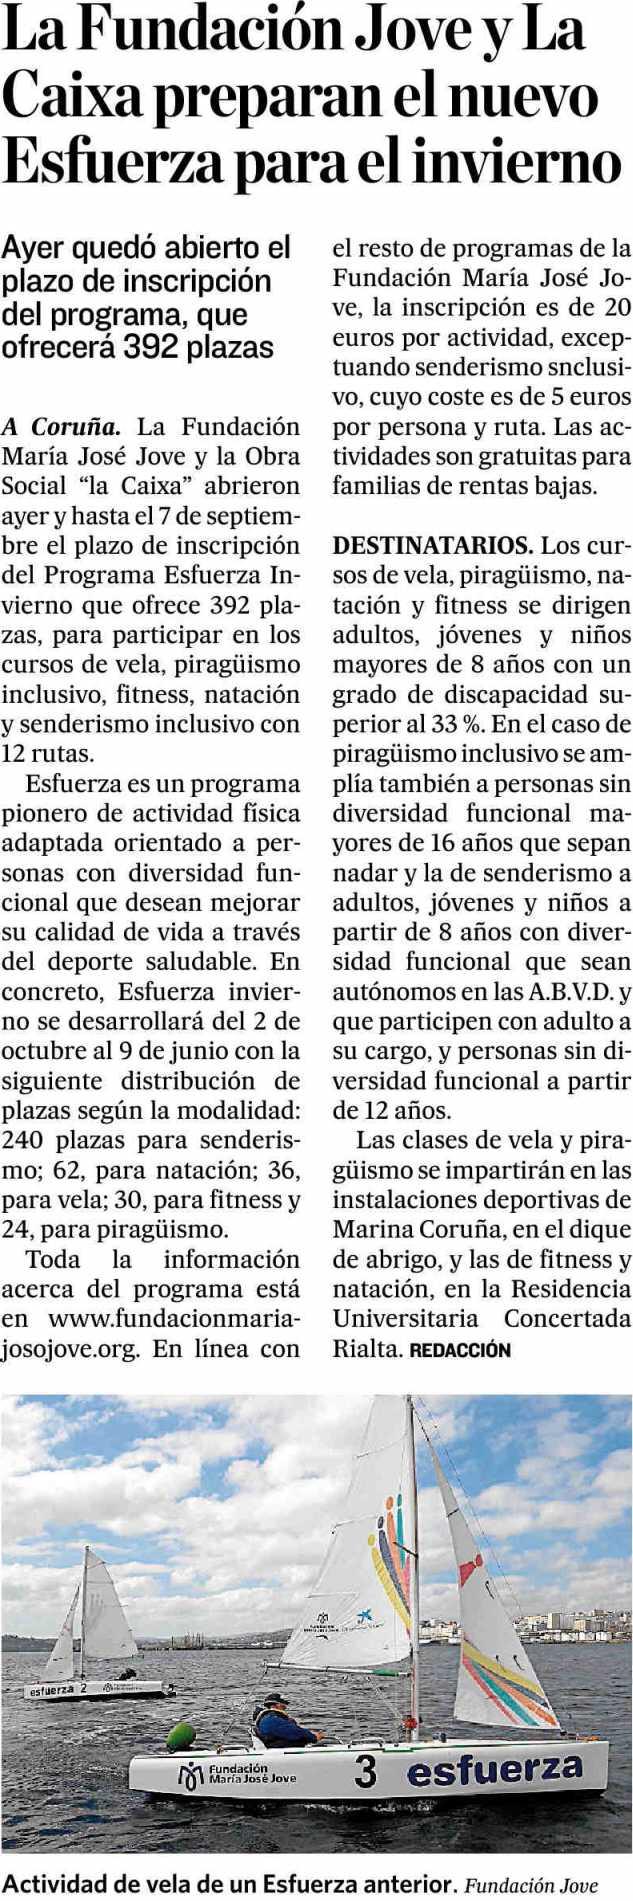 El Correo Gallego Galicia Prensa: Tirada: Difusión: 28/08/18 Diaria 27.472 Ejemplares 22.